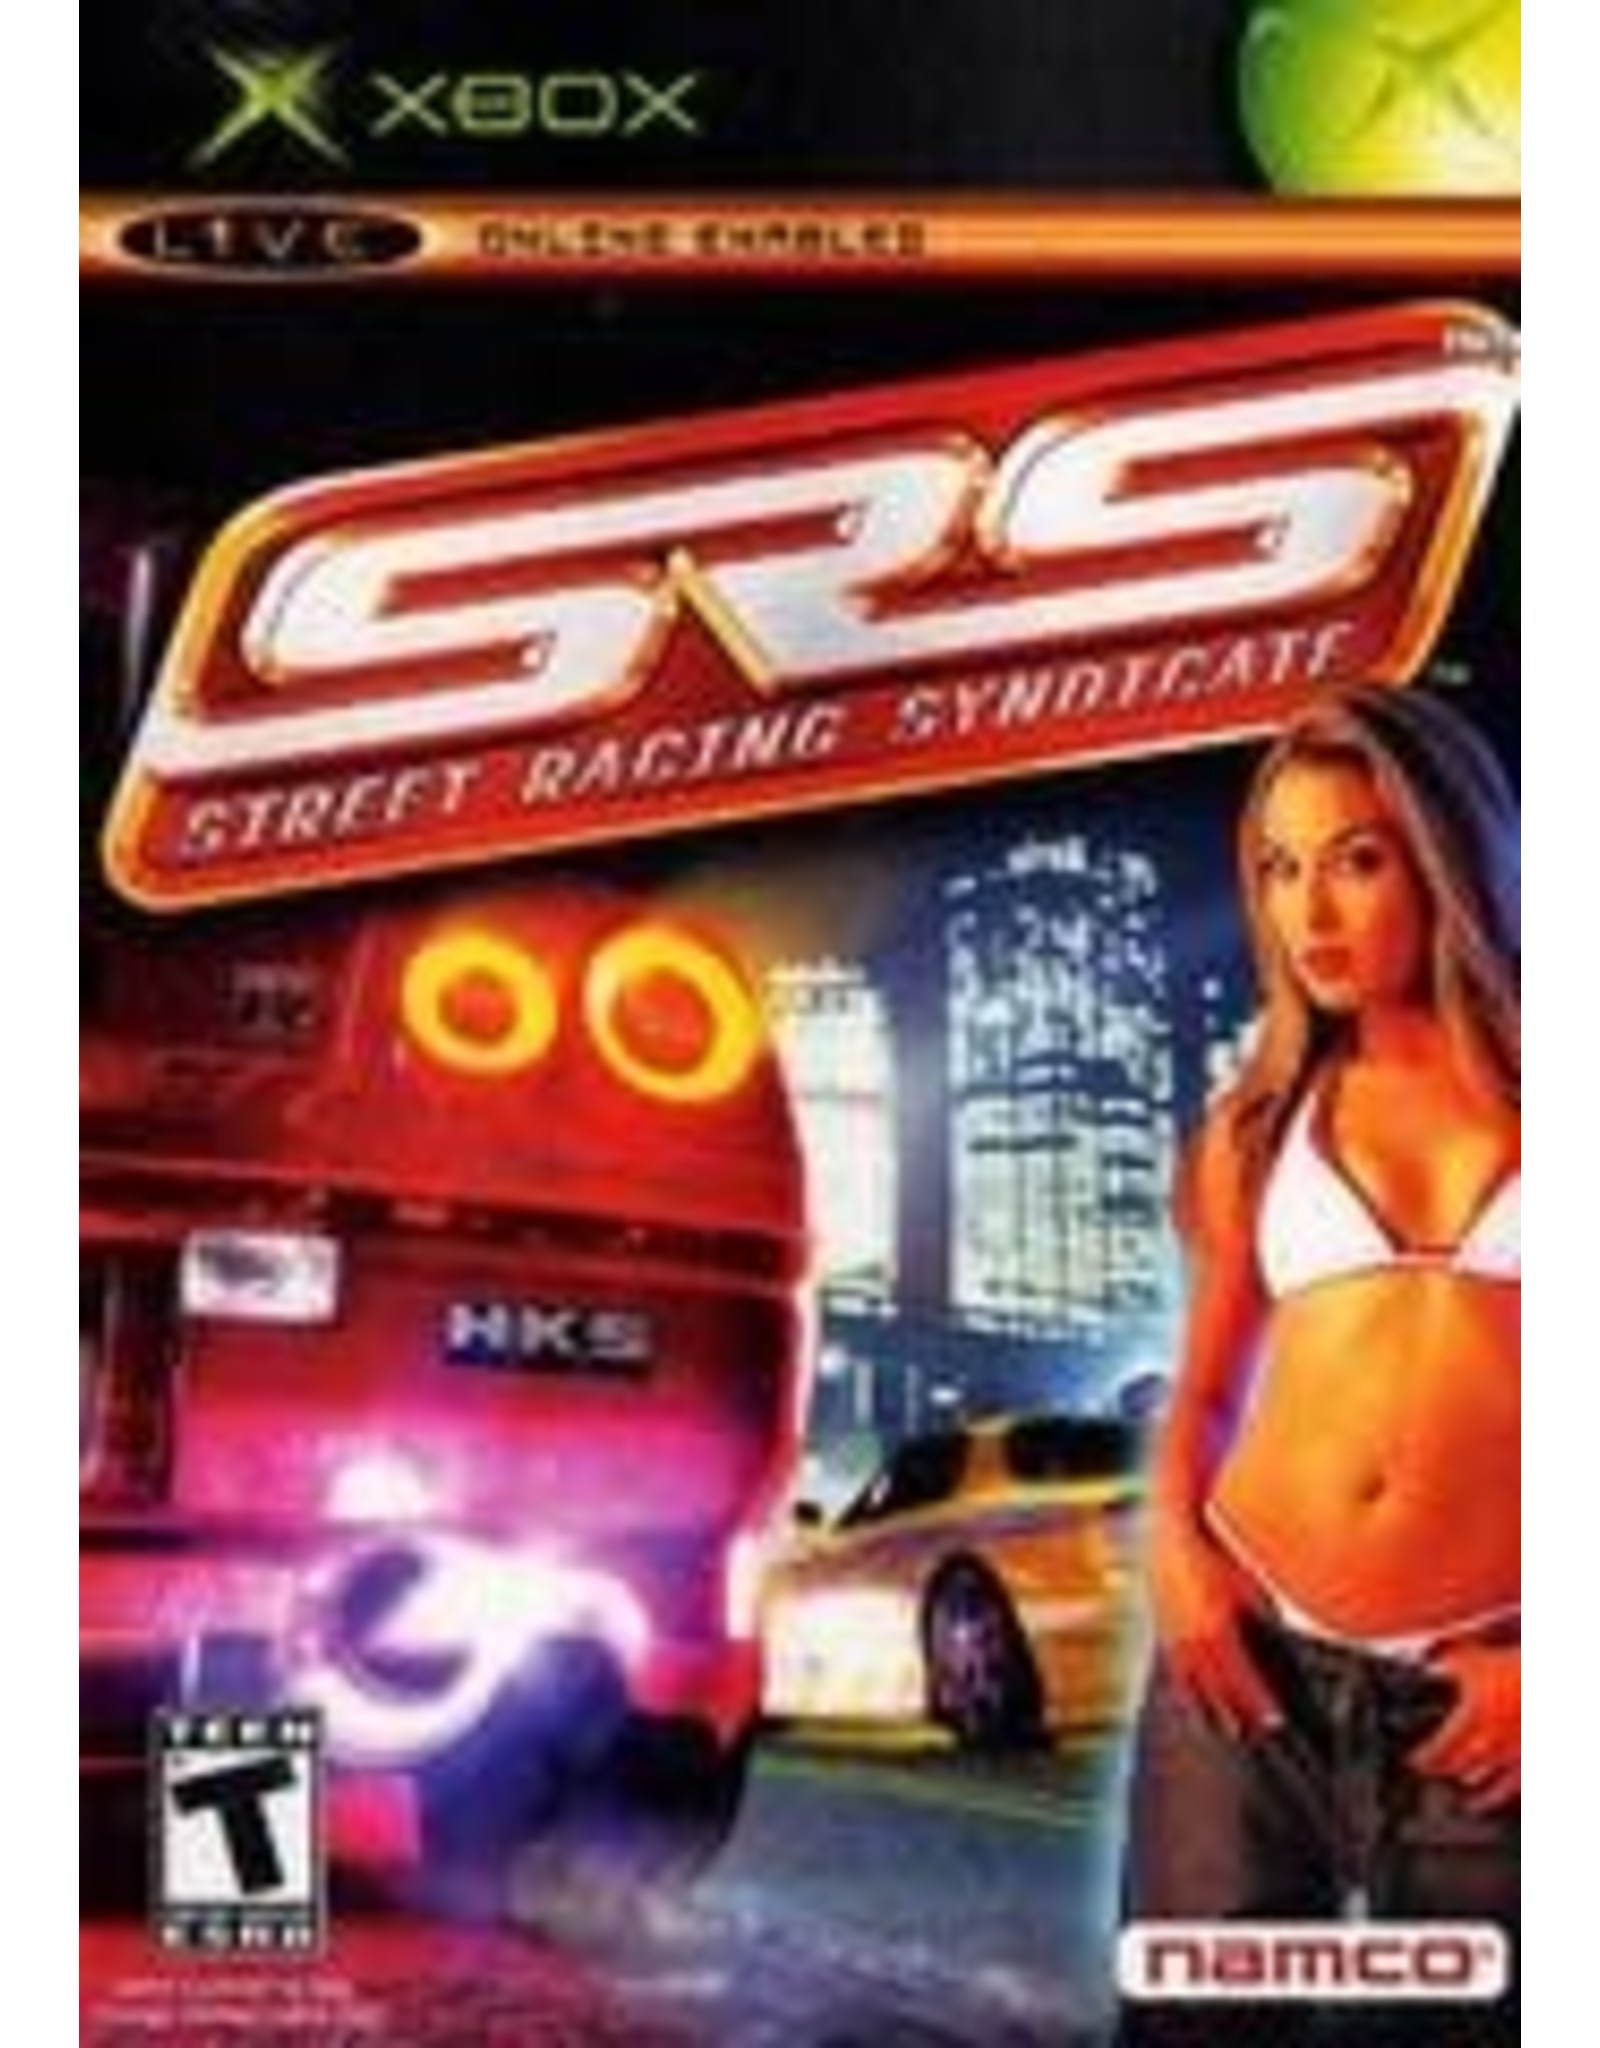 Xbox Street Racing Syndicate (CiB)